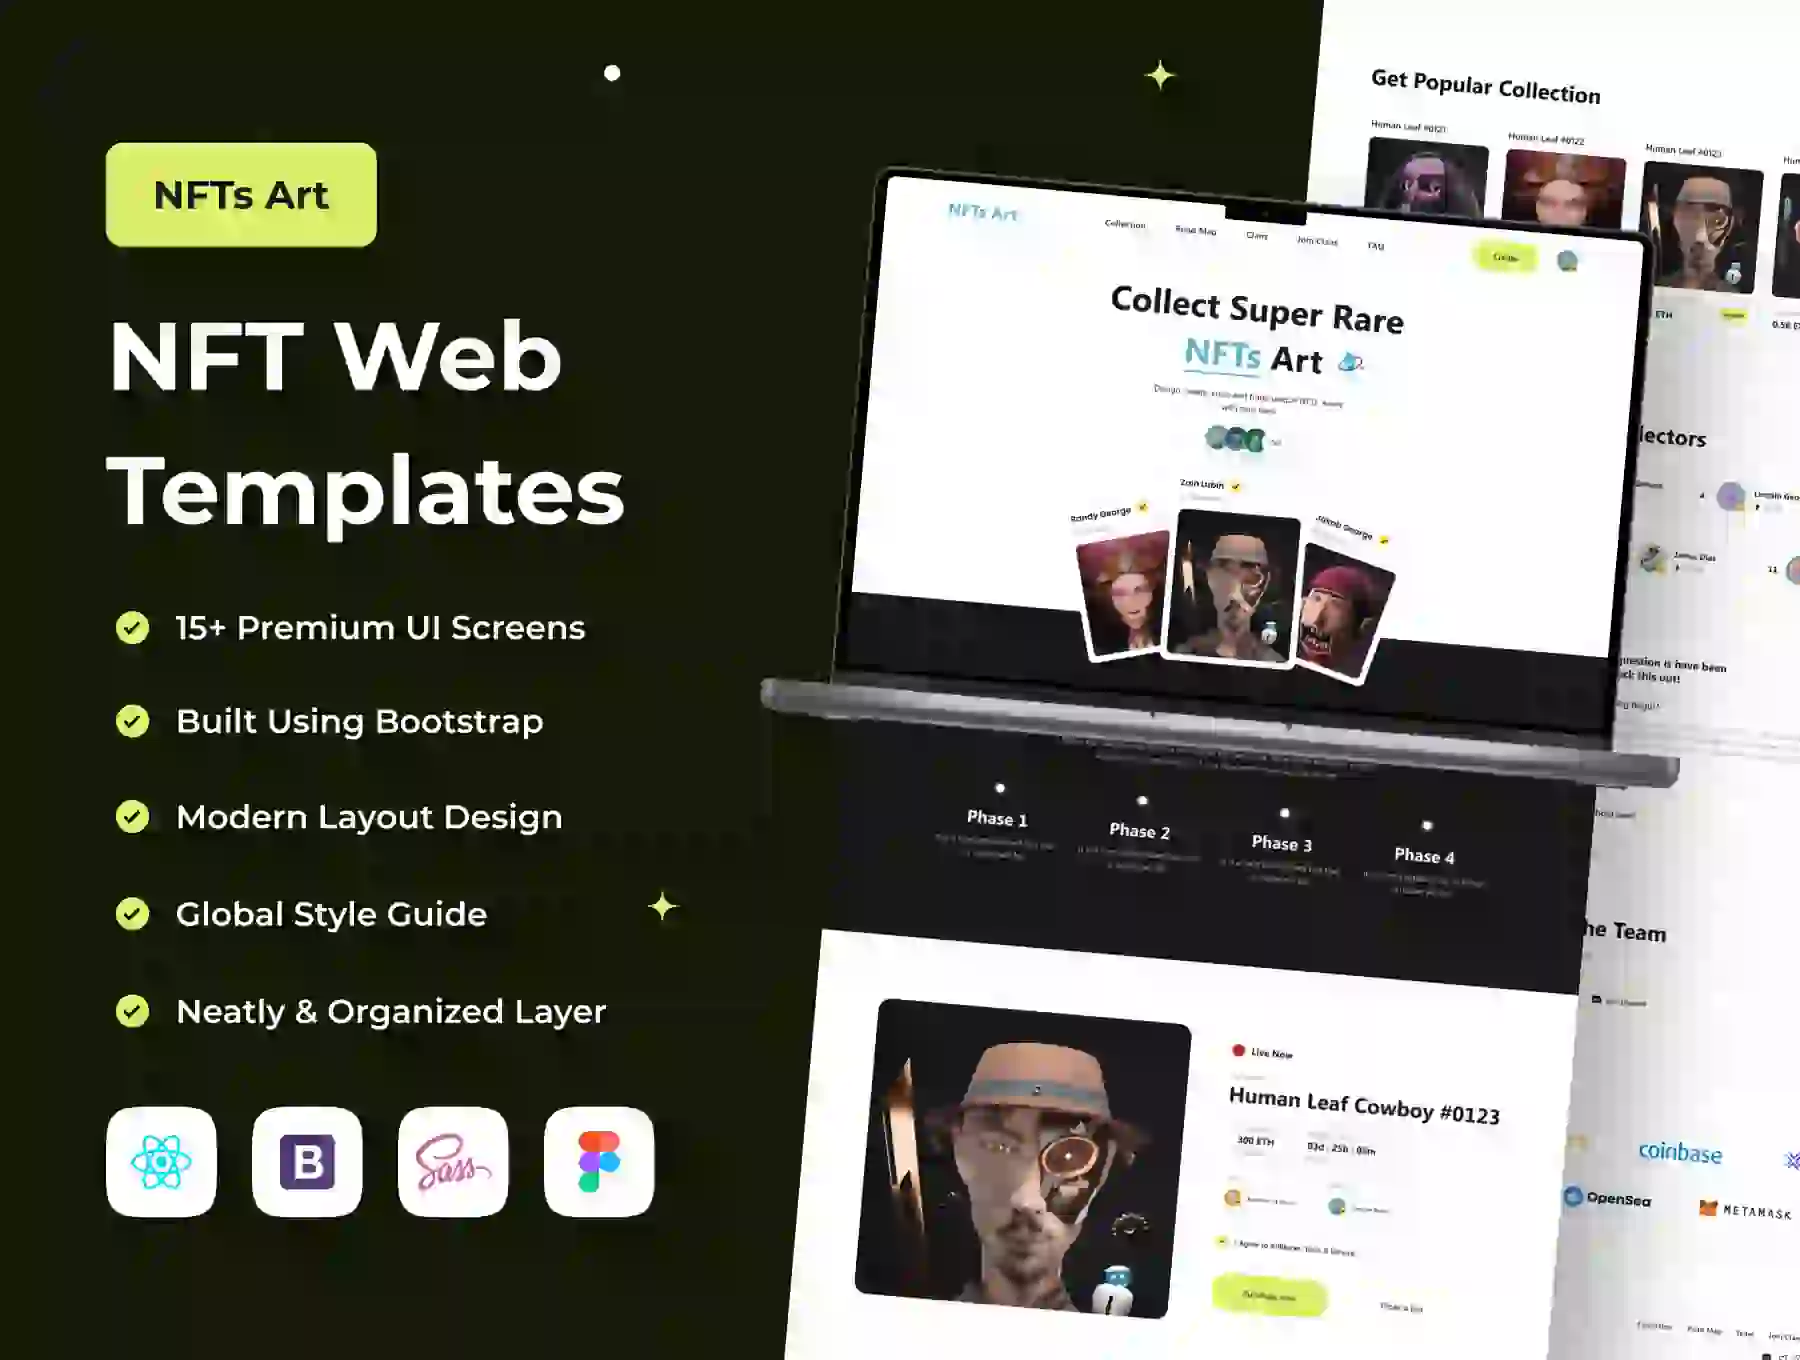 NFTs Art - NFT Web Templates